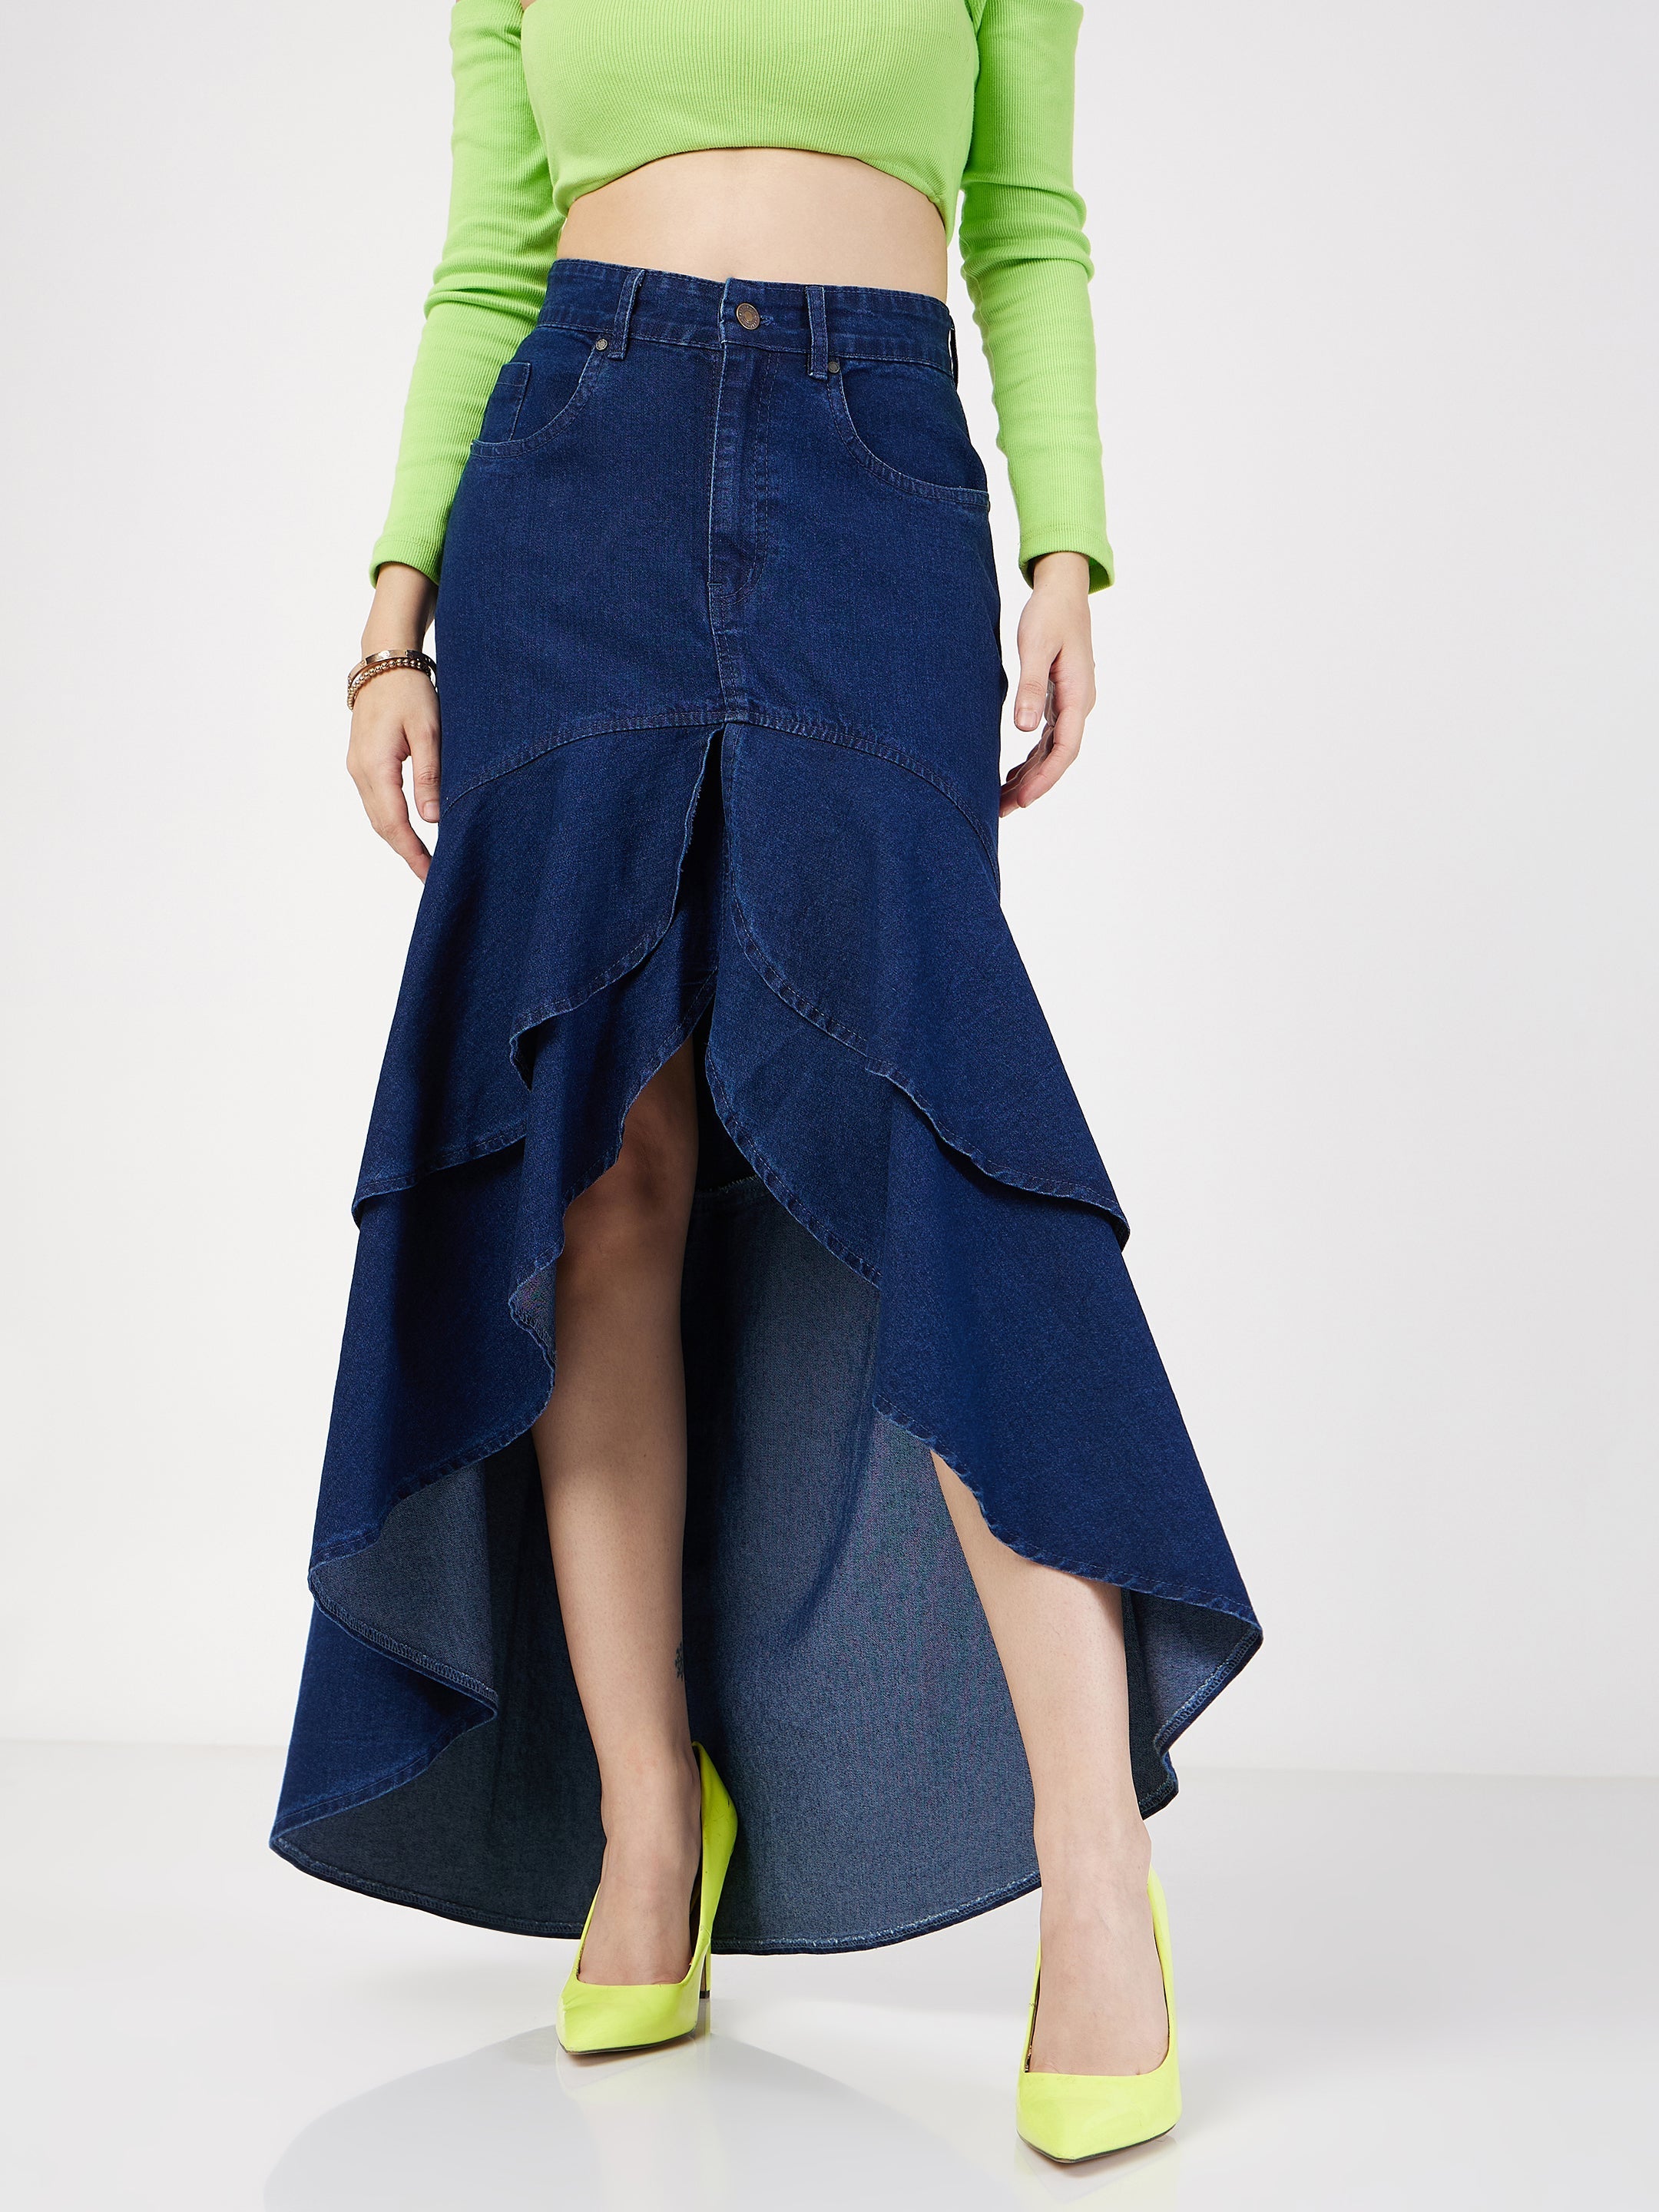 Buy Lyush Women Navy Blue Denim Ruffle High Low Skirt Online at